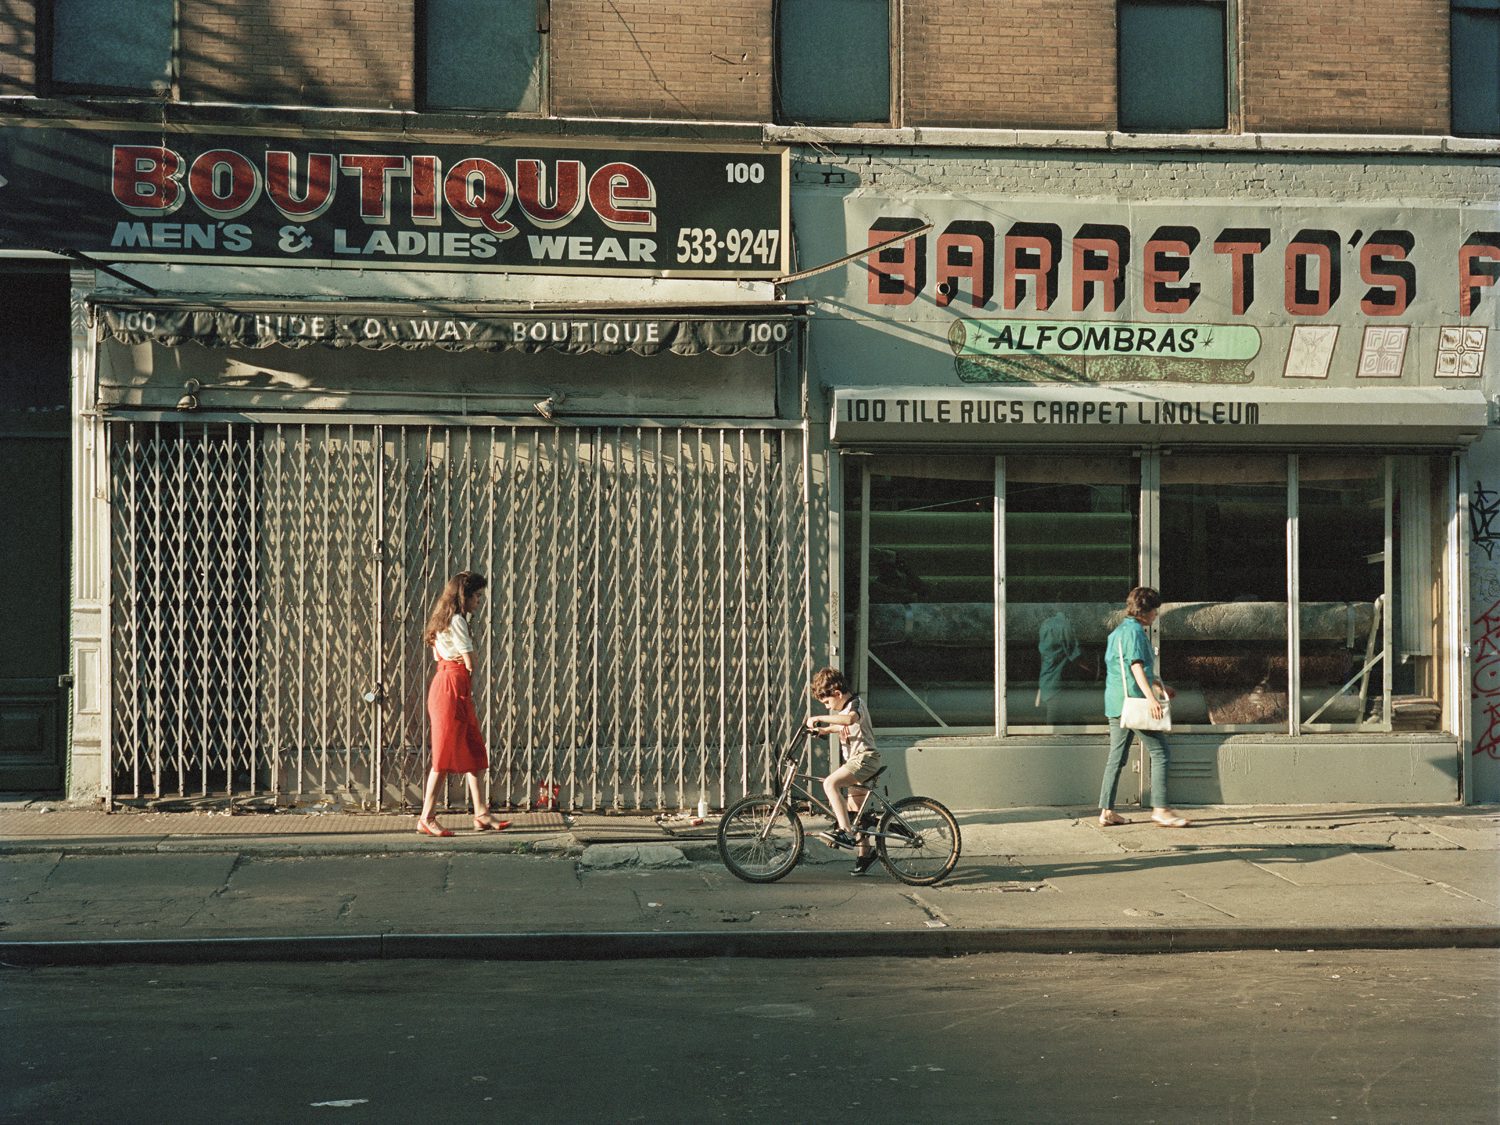 Barretos on Stanton Street, 1987